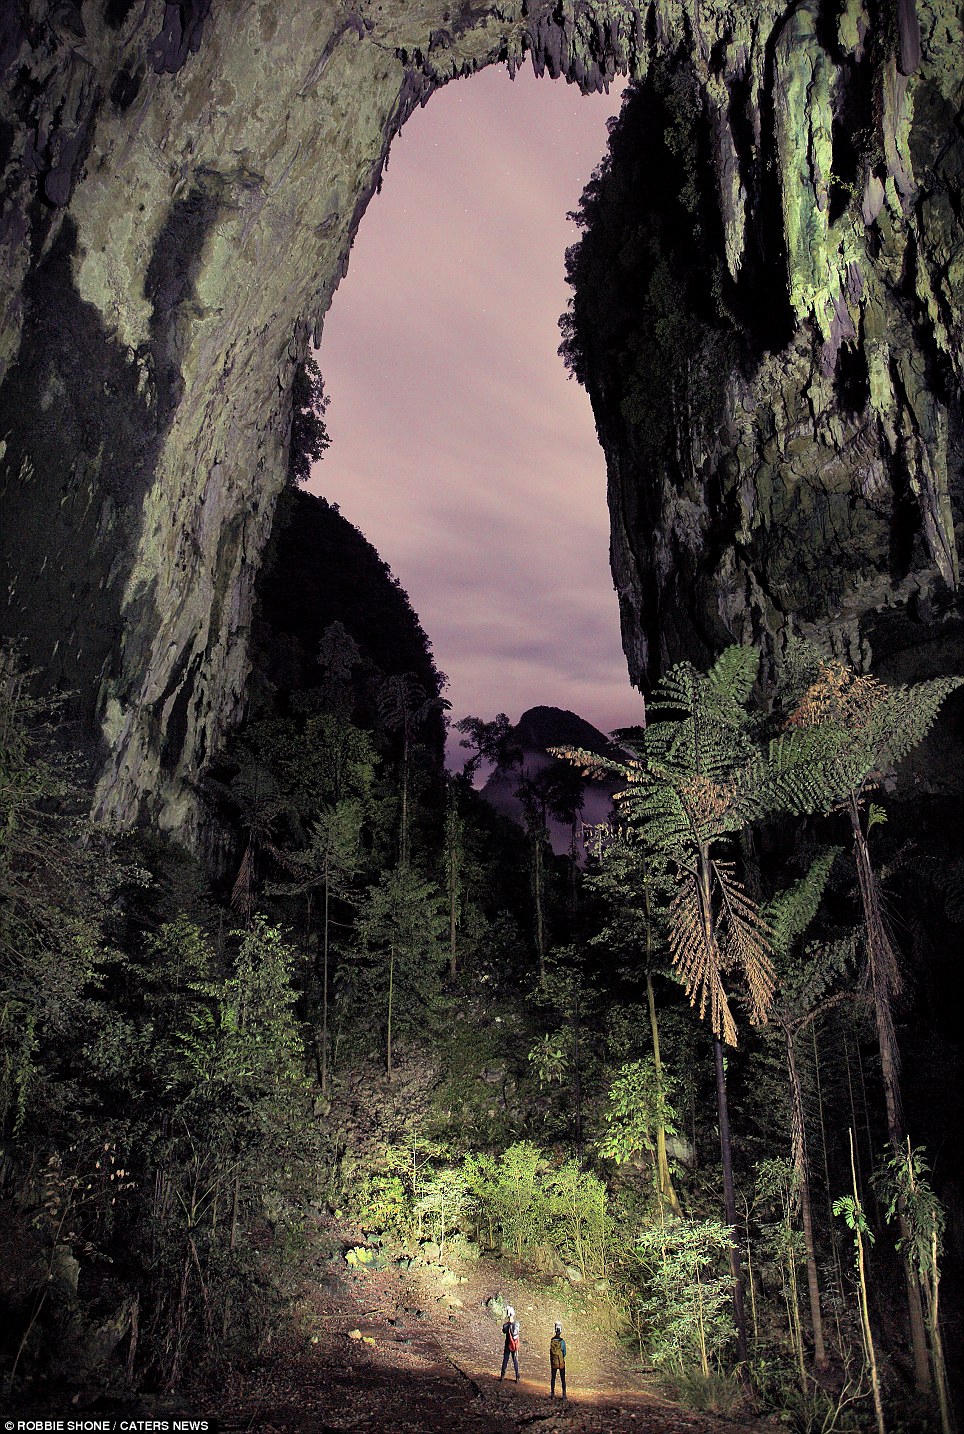 caves in vietnam